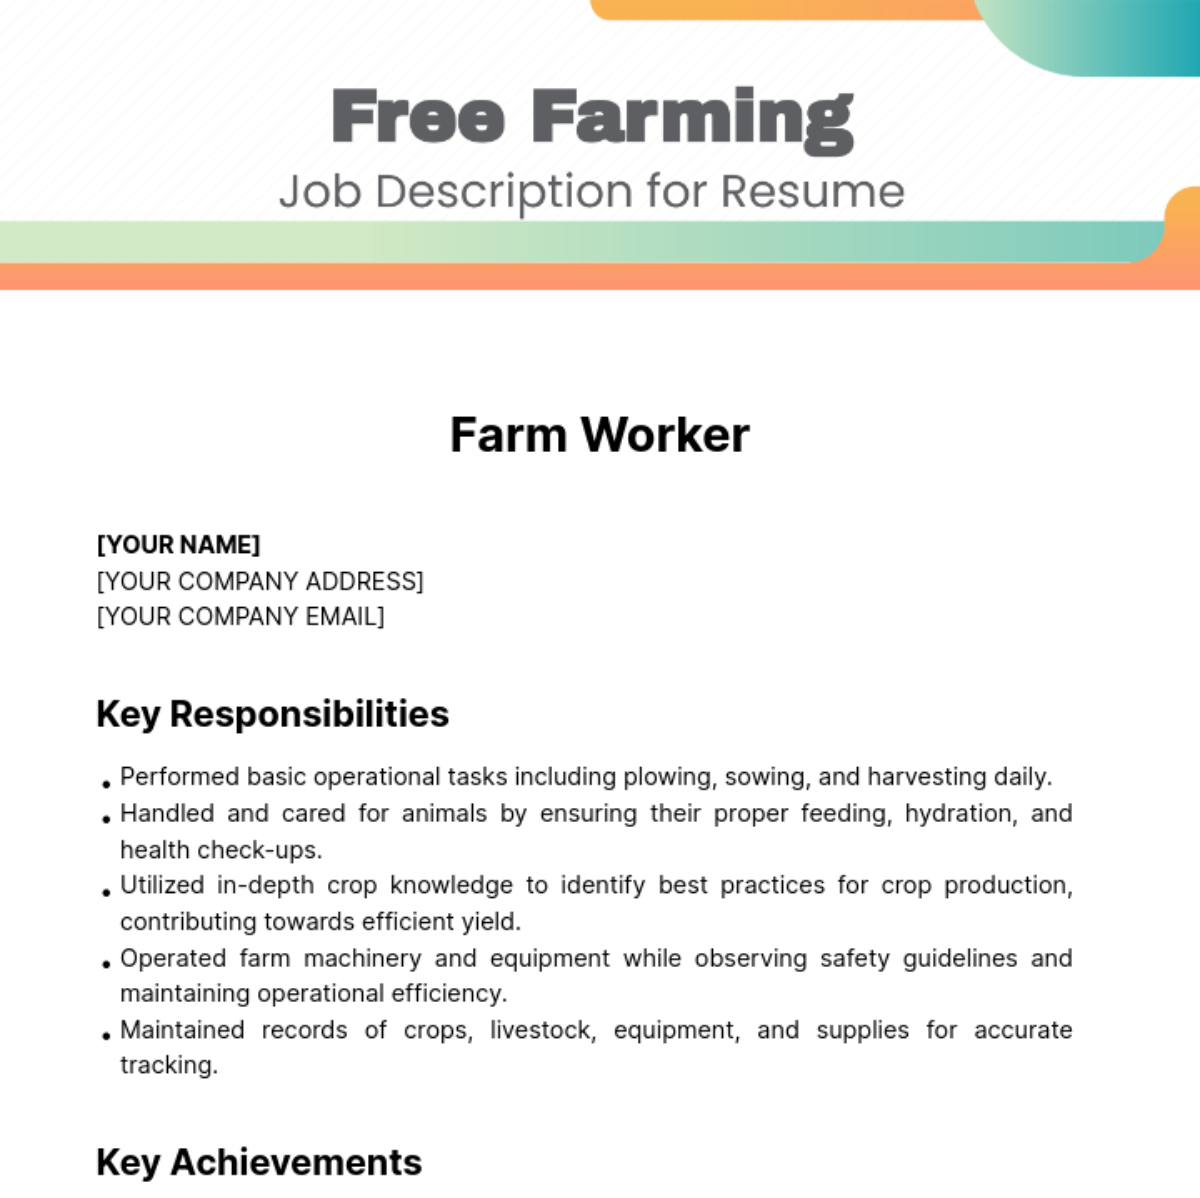 Free Farming Job Description for Resume Template